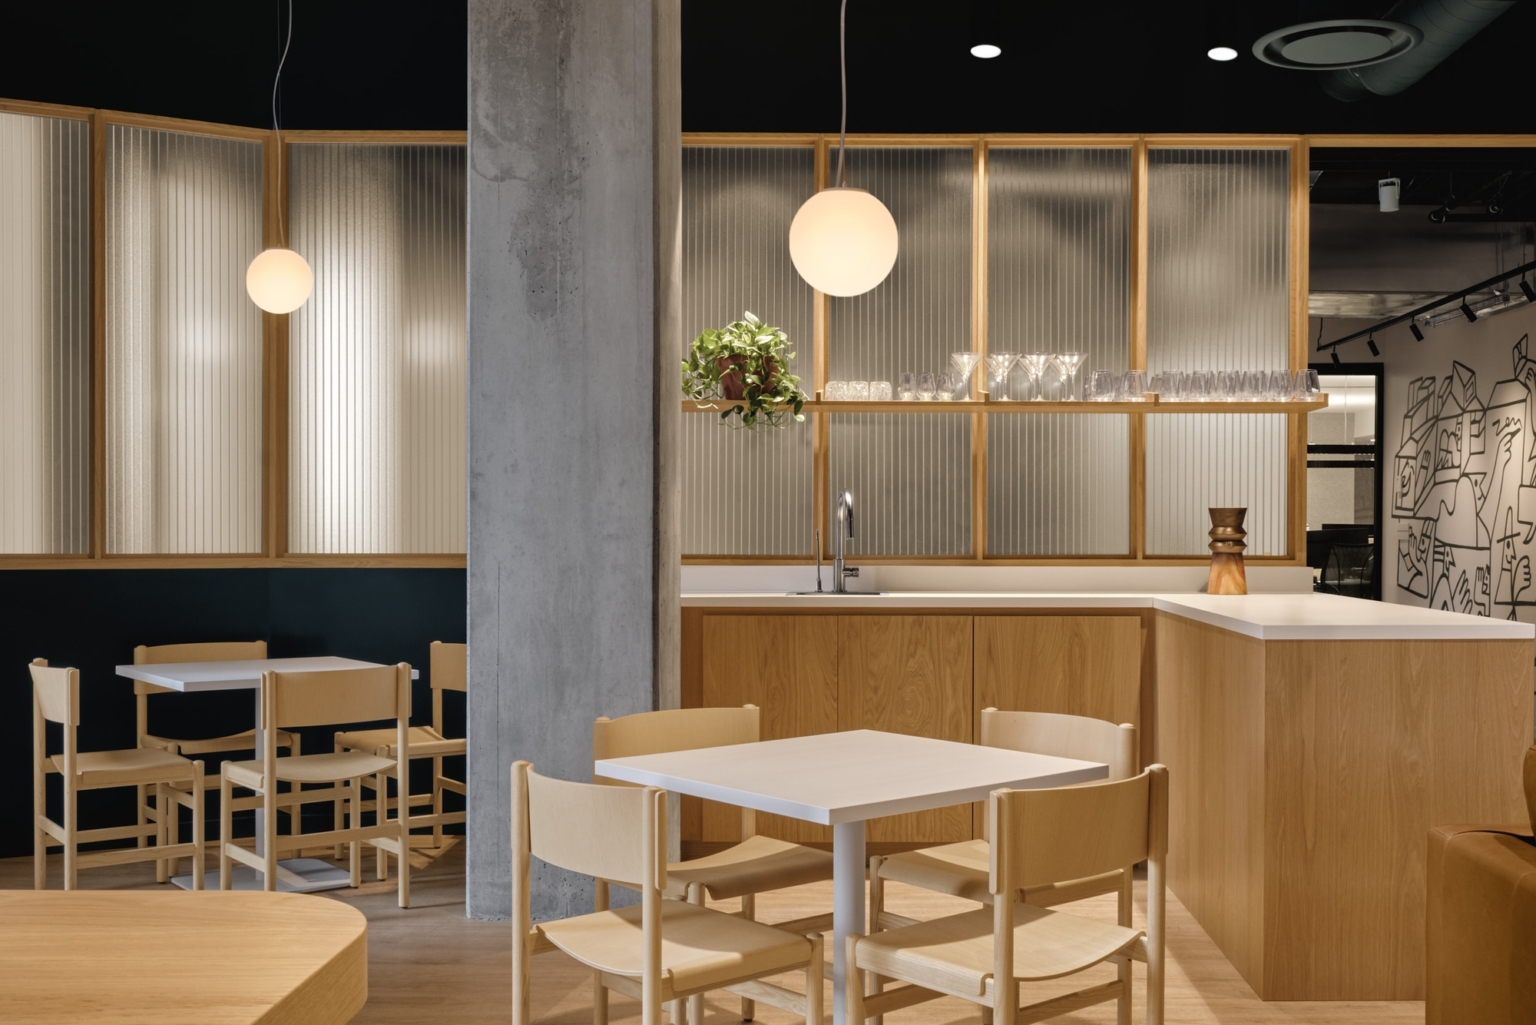 【Zendeskのオフィスデザイン】- カナダ, モントリオールのカフェ/レストランスペース